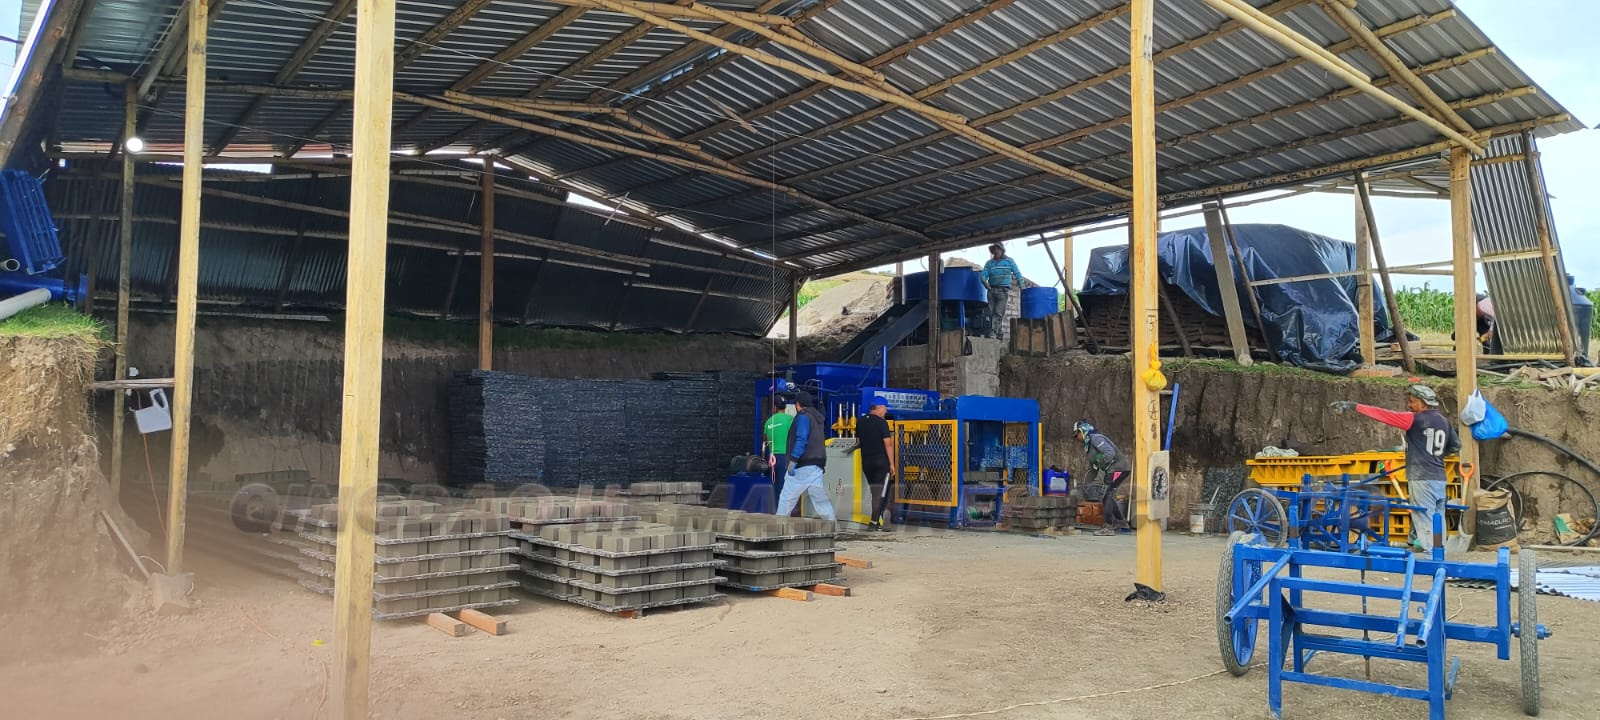 African brick making machine site